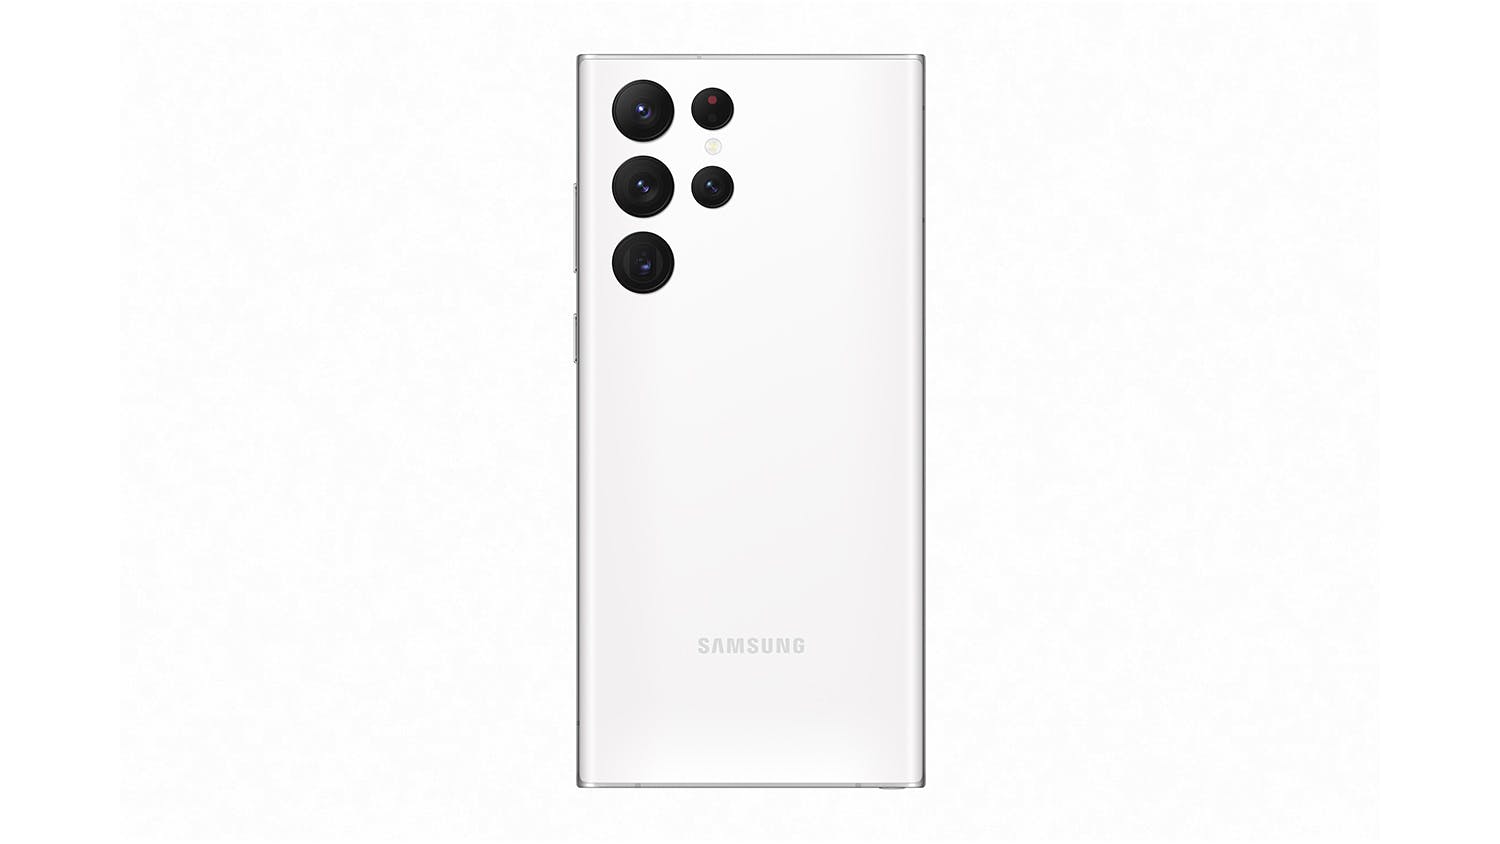 Samsung Galaxy S22 Ultra 5G 512GB Smartphone - Phantom White (Spark/Open Network)